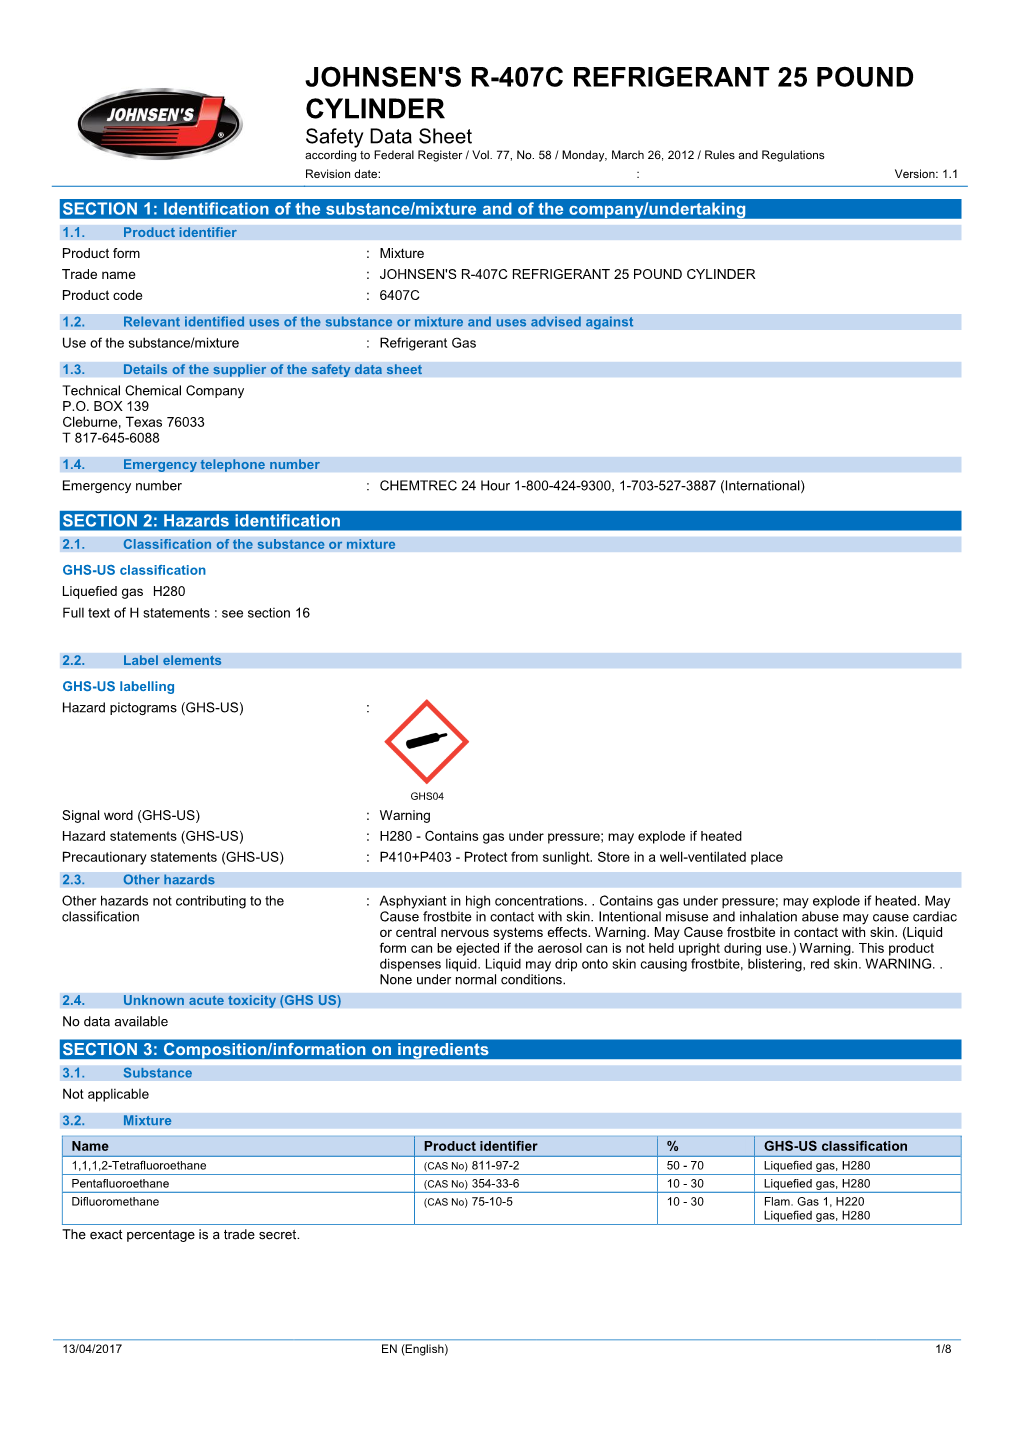 JOHNSEN's R-407C REFRIGERANT 25 POUND CYLINDER Safety Data Sheet According to Federal Register / Vol